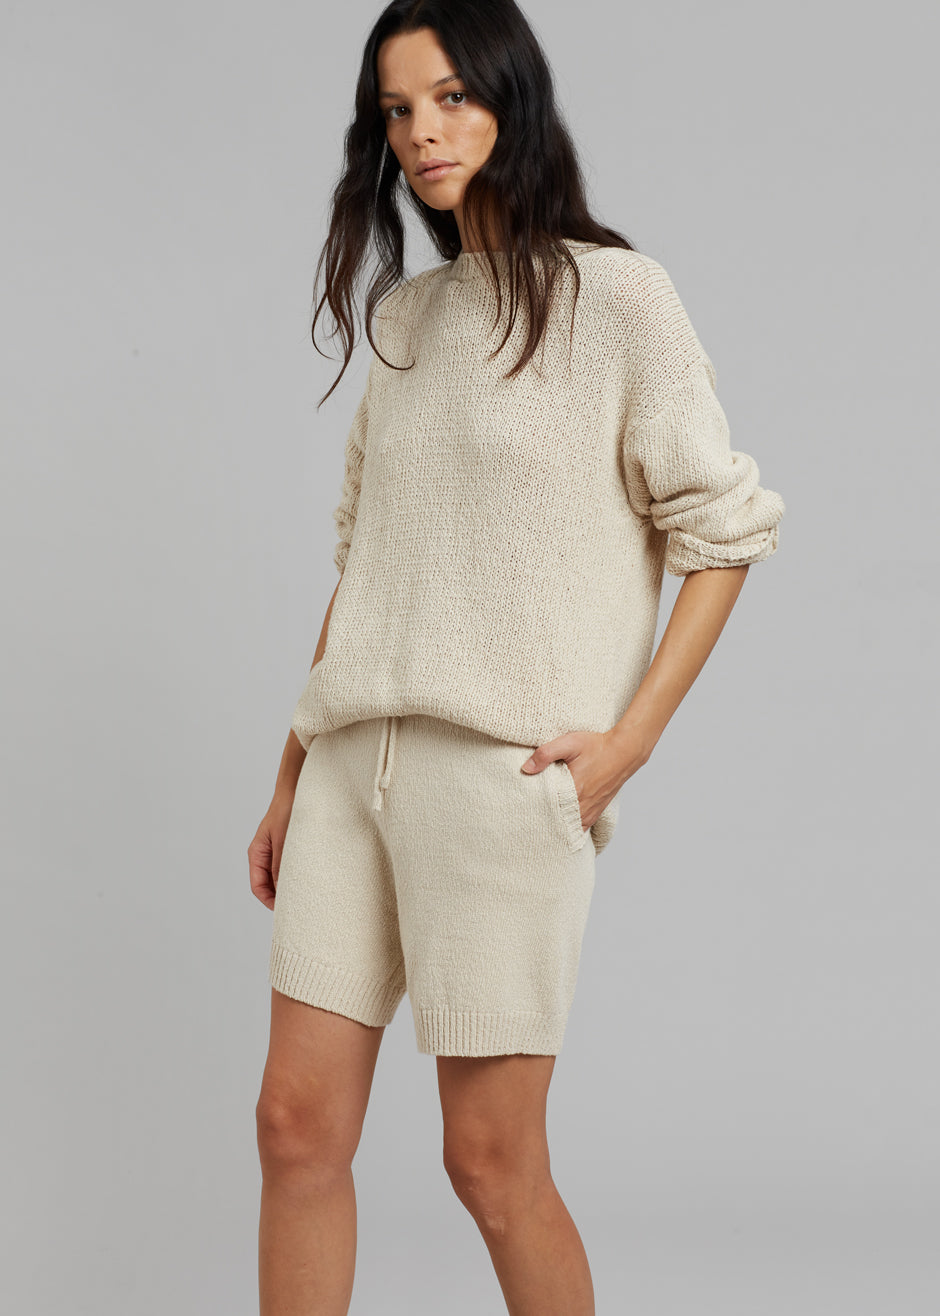 Ode Knit Shorts - Cream - 1